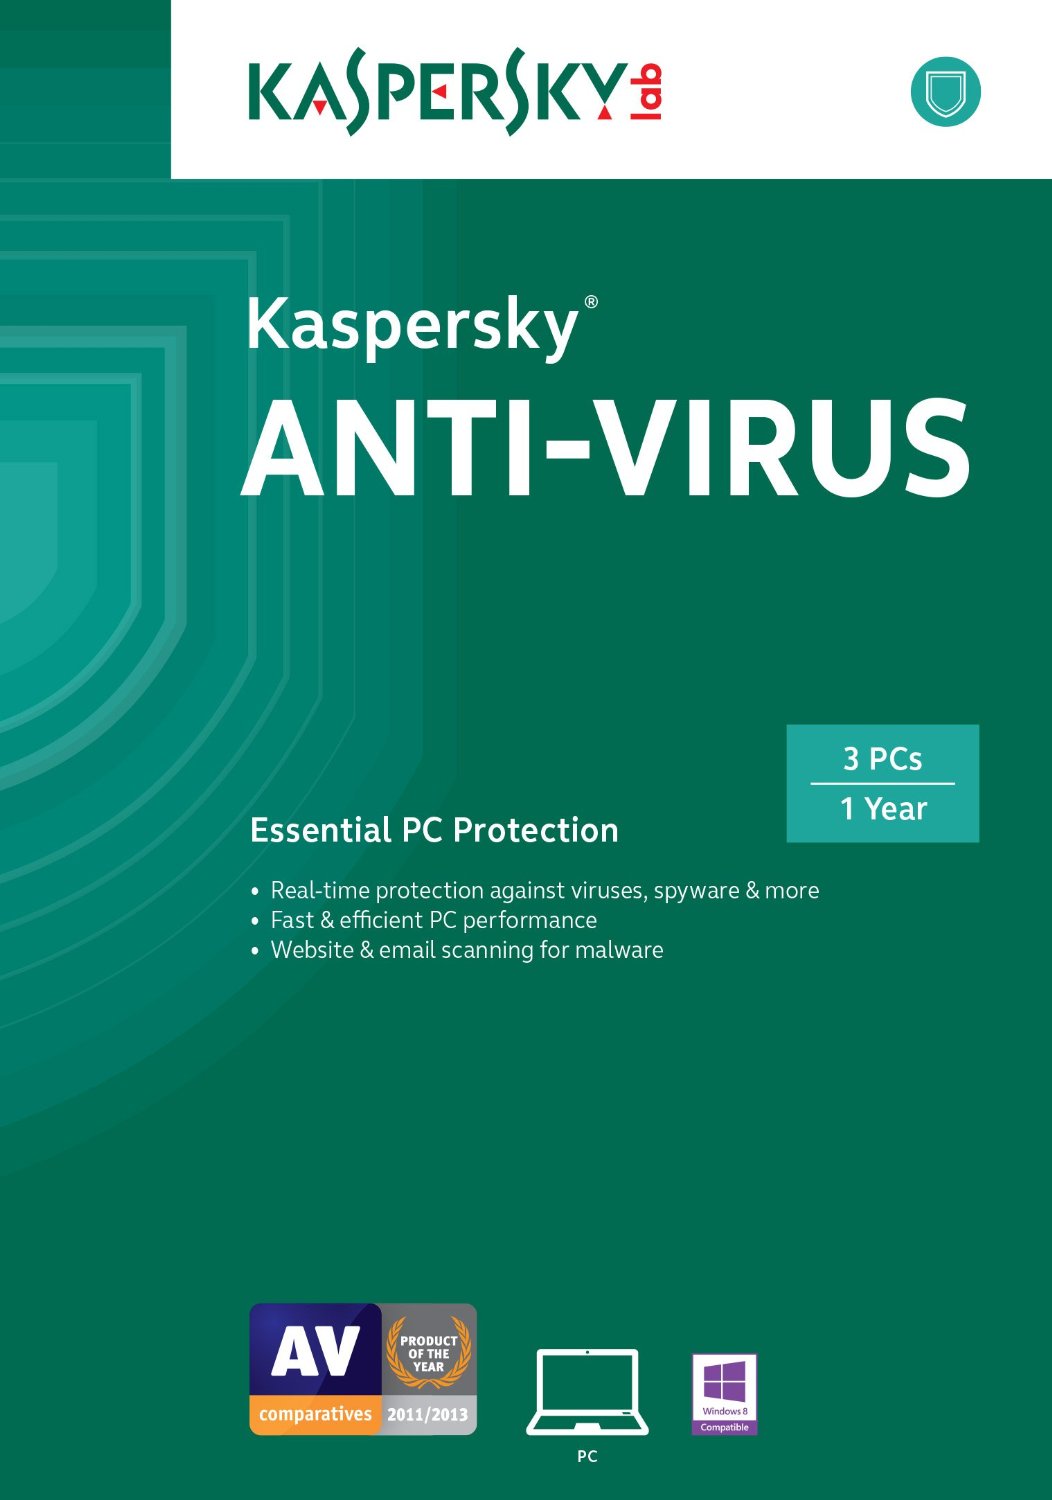 Kaspersky Virus Removal Tool 20.0.10.0 instal the last version for windows